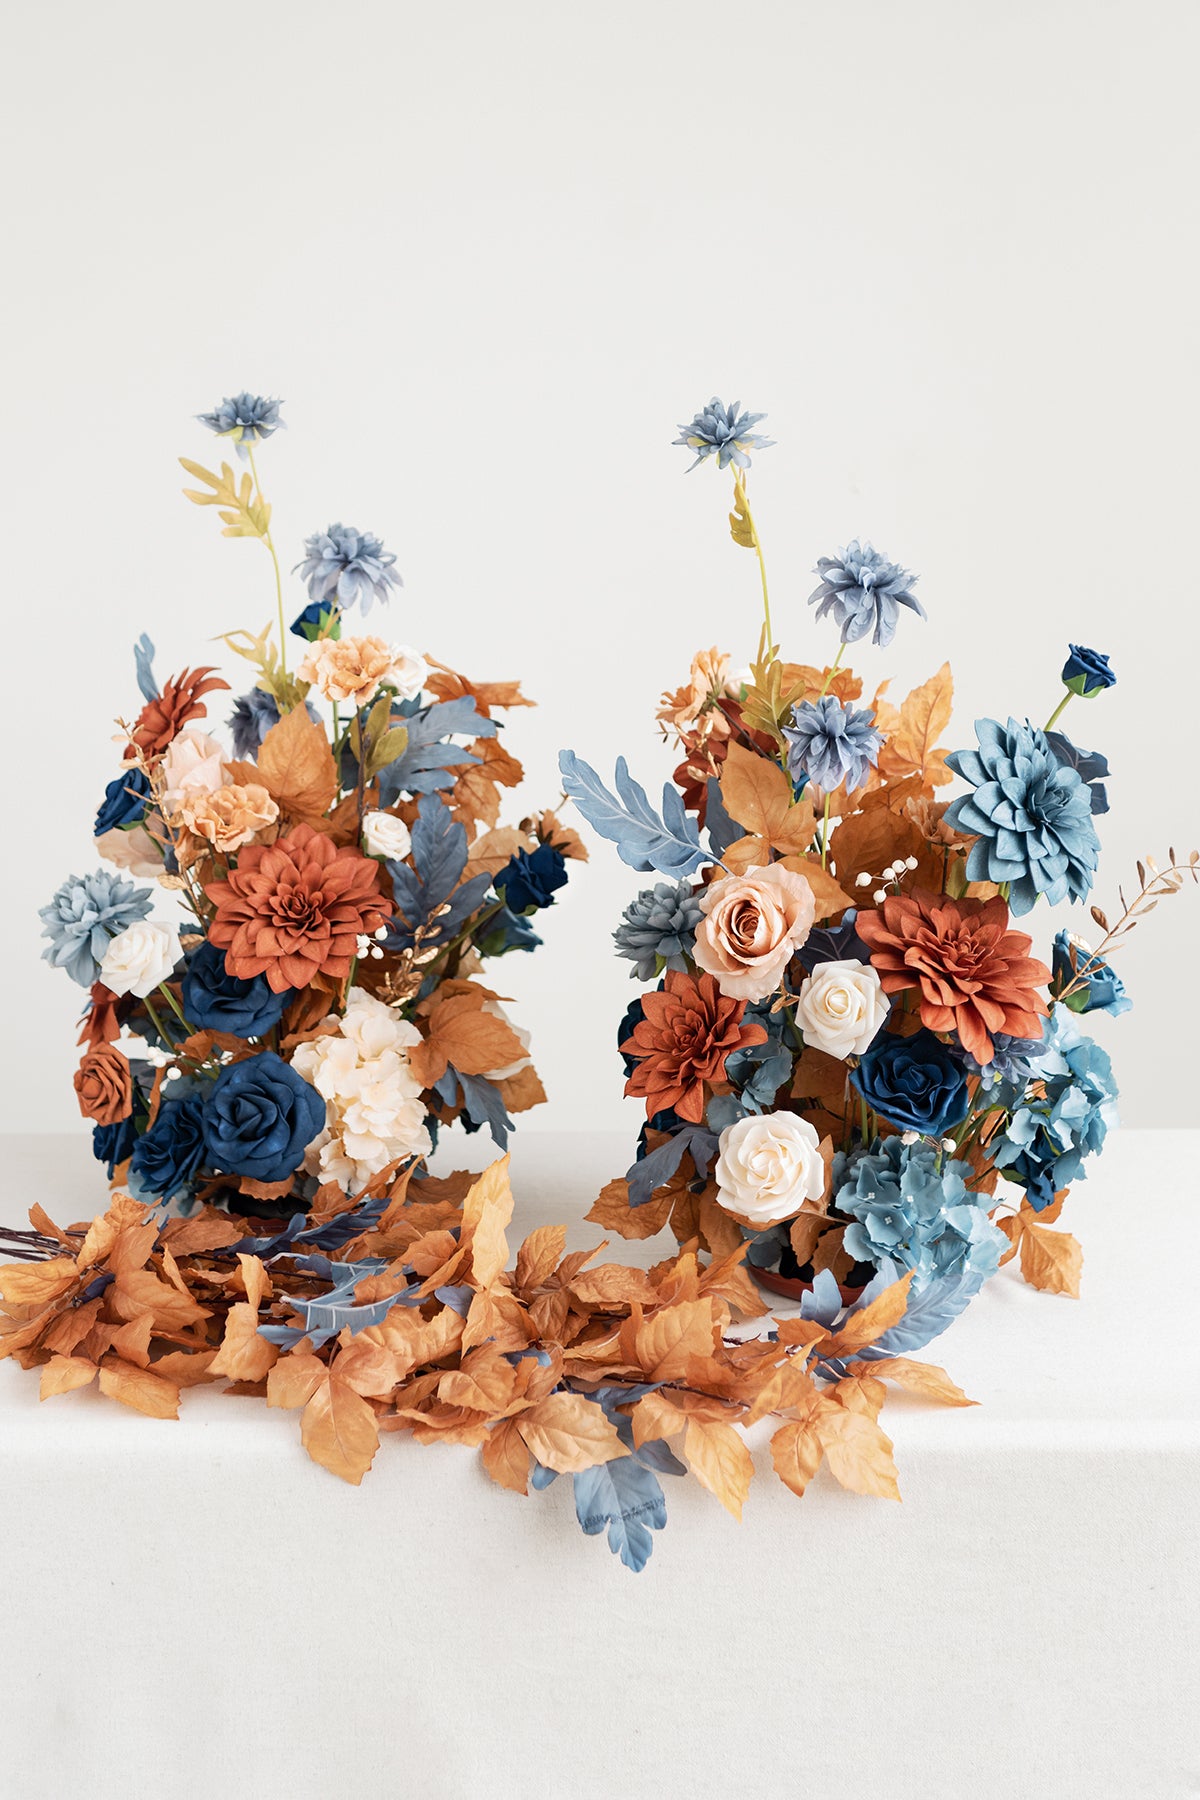 Oversized Free-Standing Flower Arrangements in Russet Orange & Denim Blue